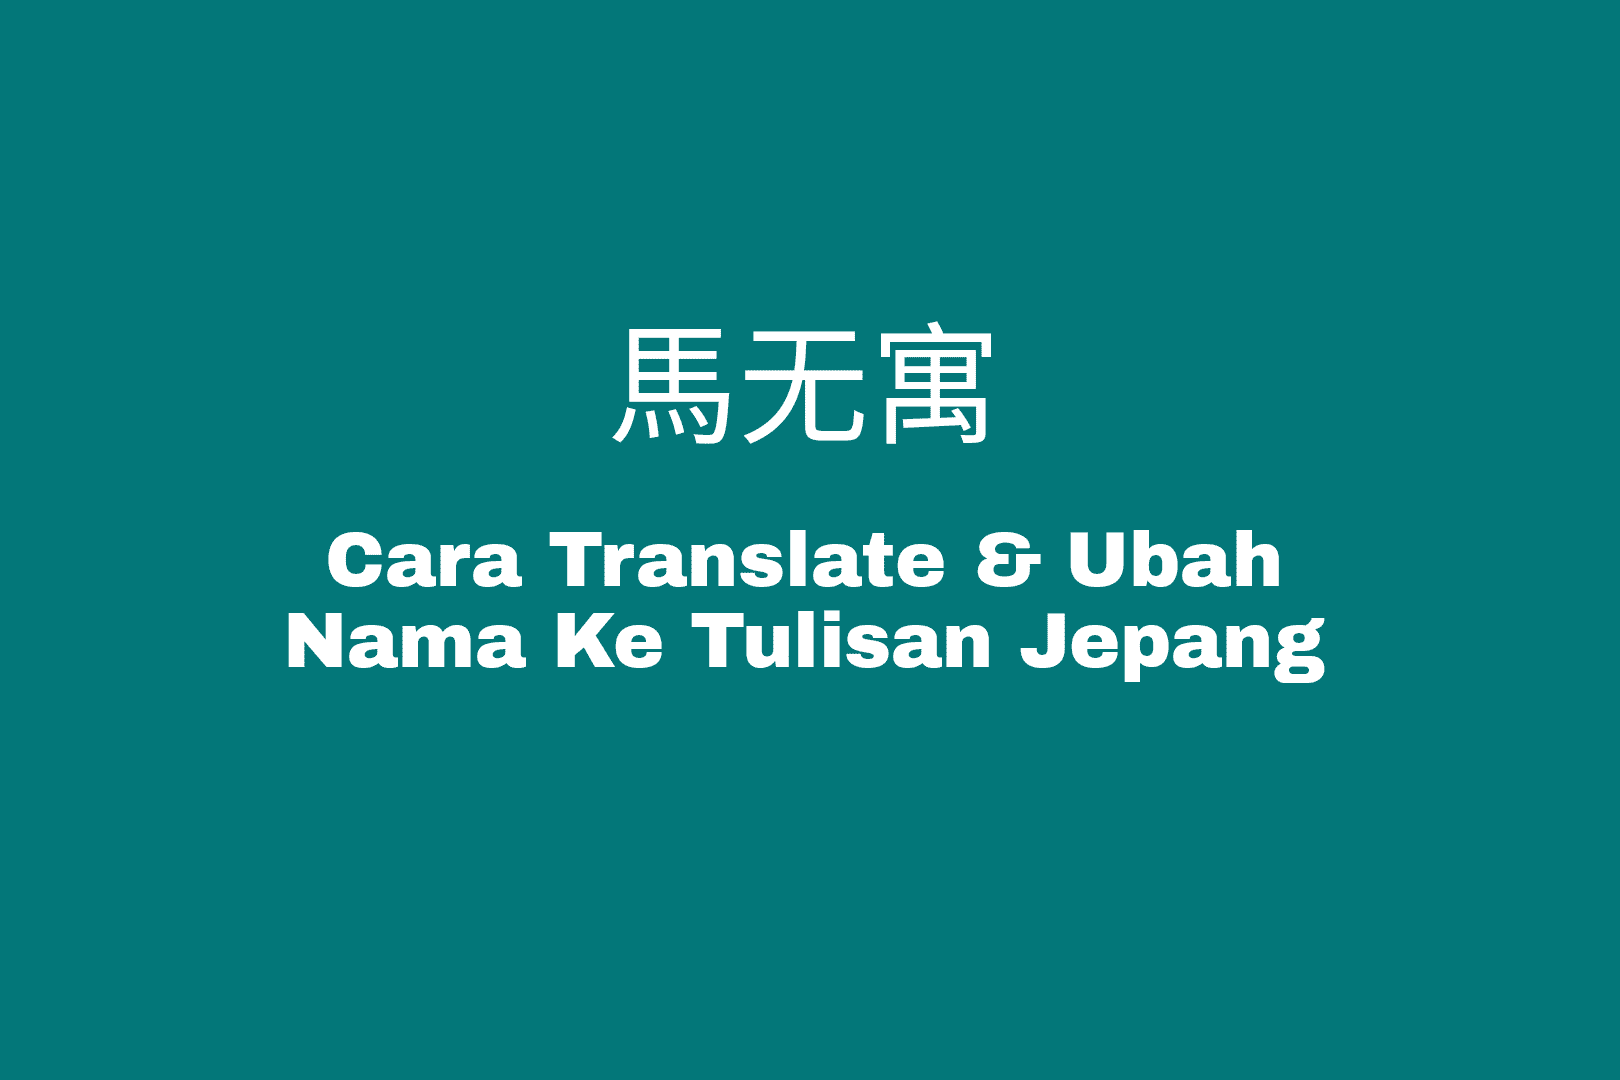 Translate jepang